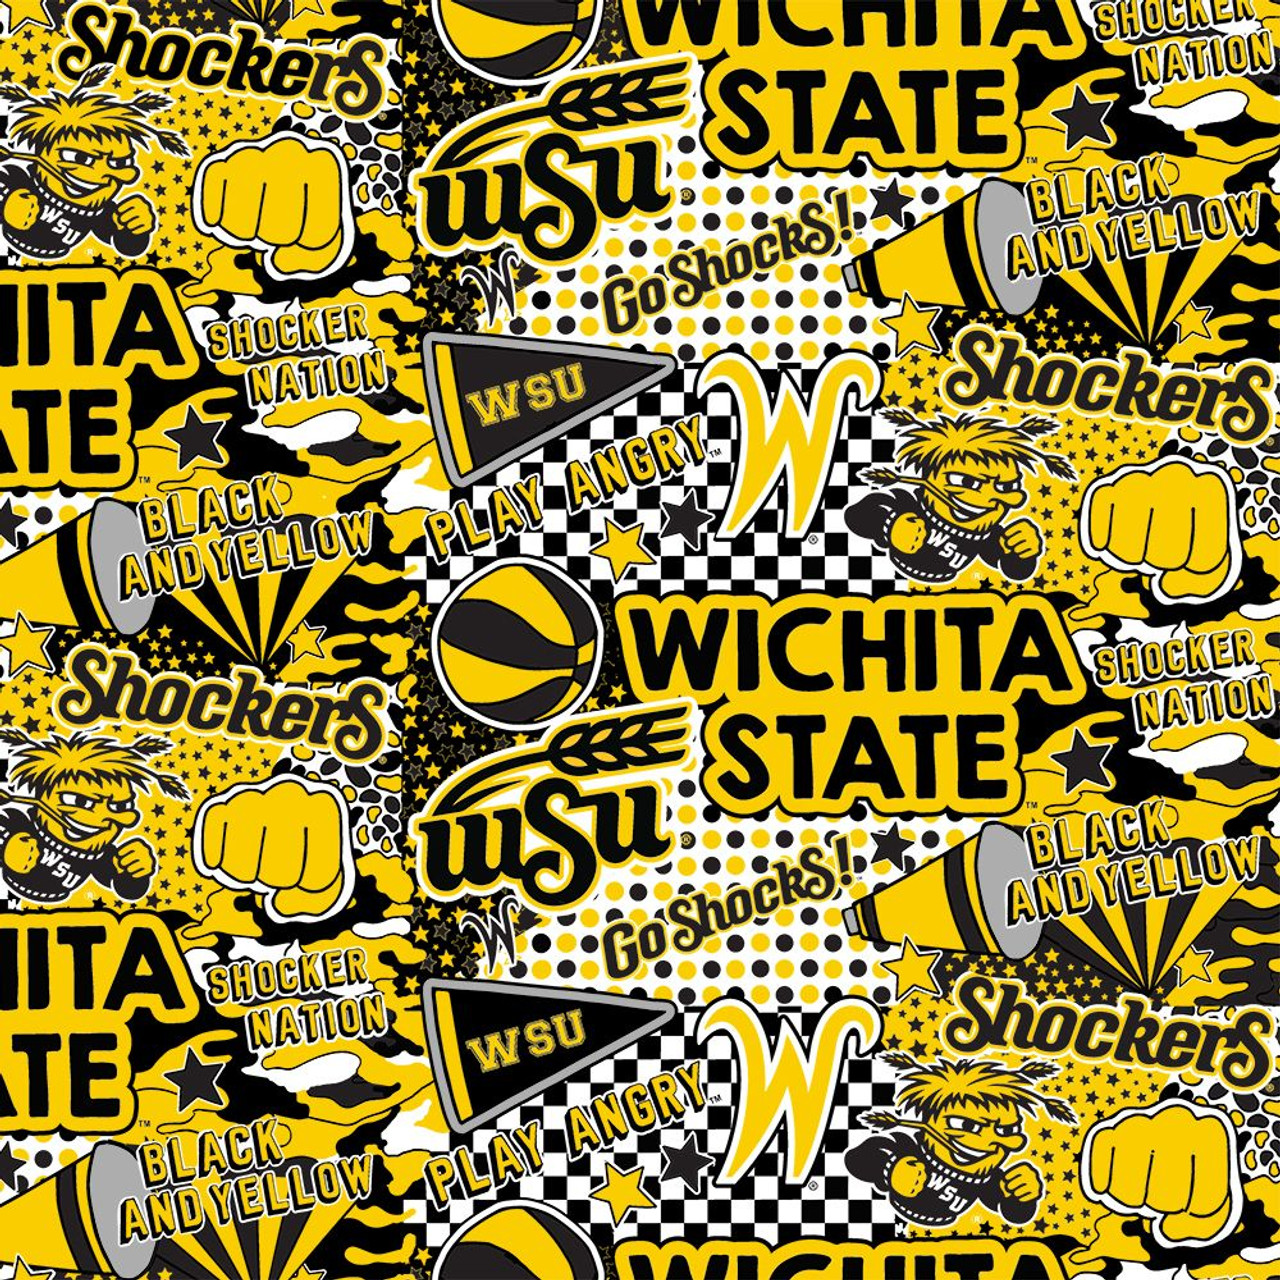 Wichita State University Shockers Cotton Fabric with Pop Art Print and Matching Solid Cotton Fabrics